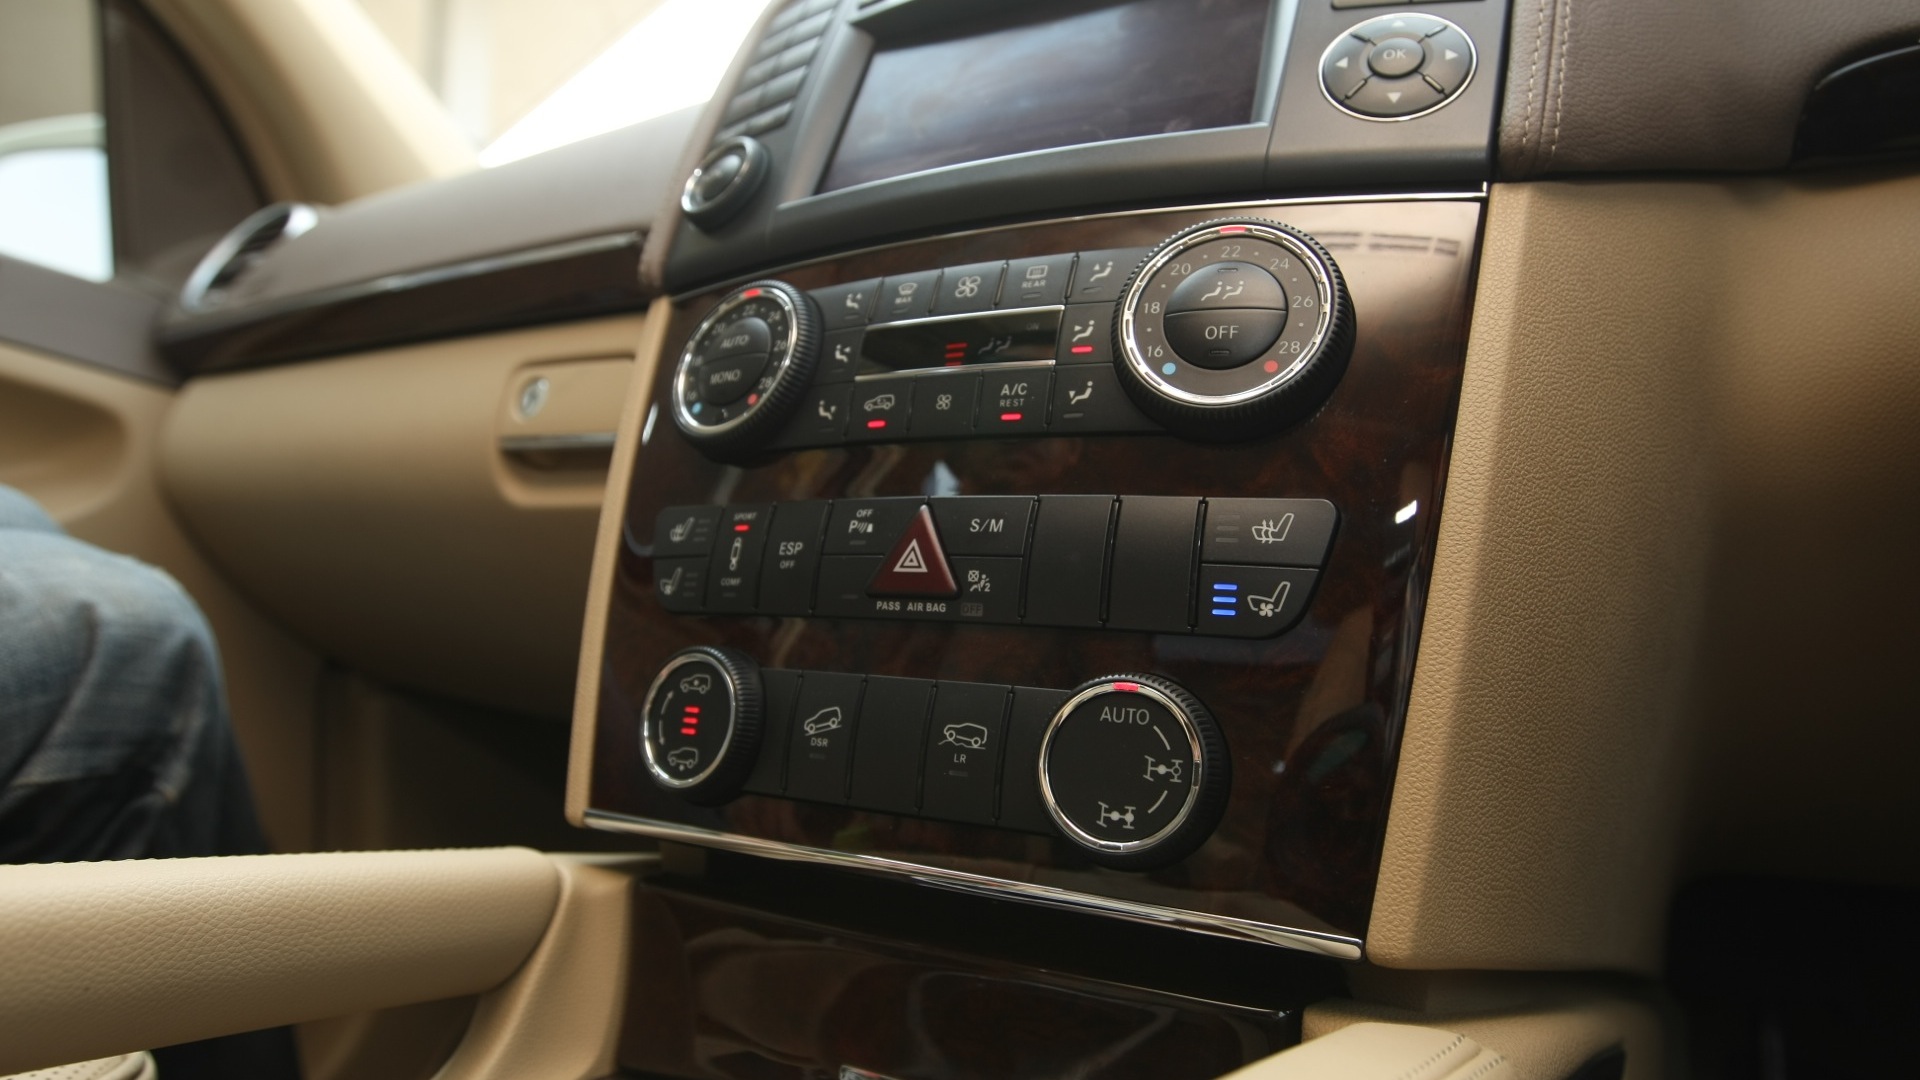 Mercedesbenz-GL-class-2013-GL-350-CDI-Executive-Interior